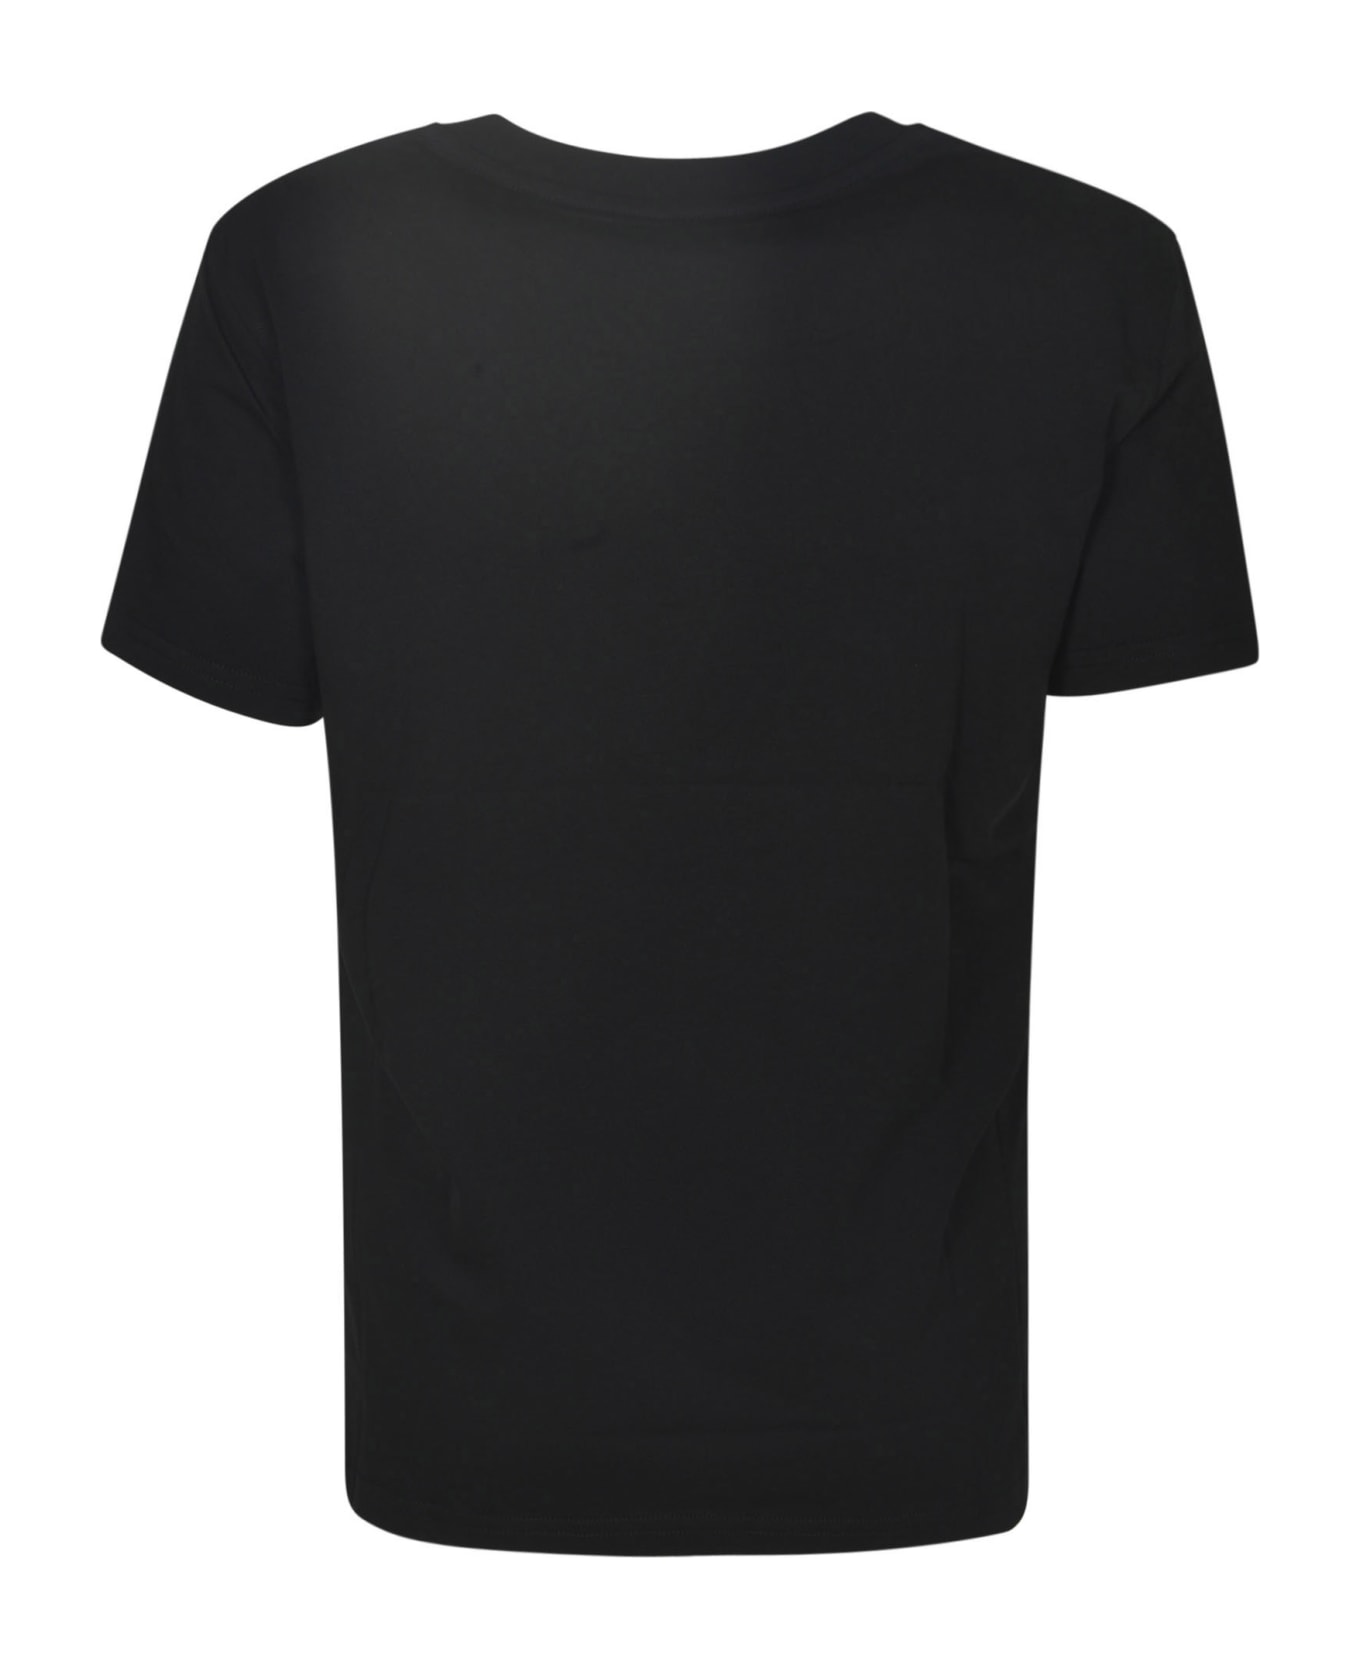 Moschino Teddy 40 Years Of Love T-shirt - Black Tシャツ